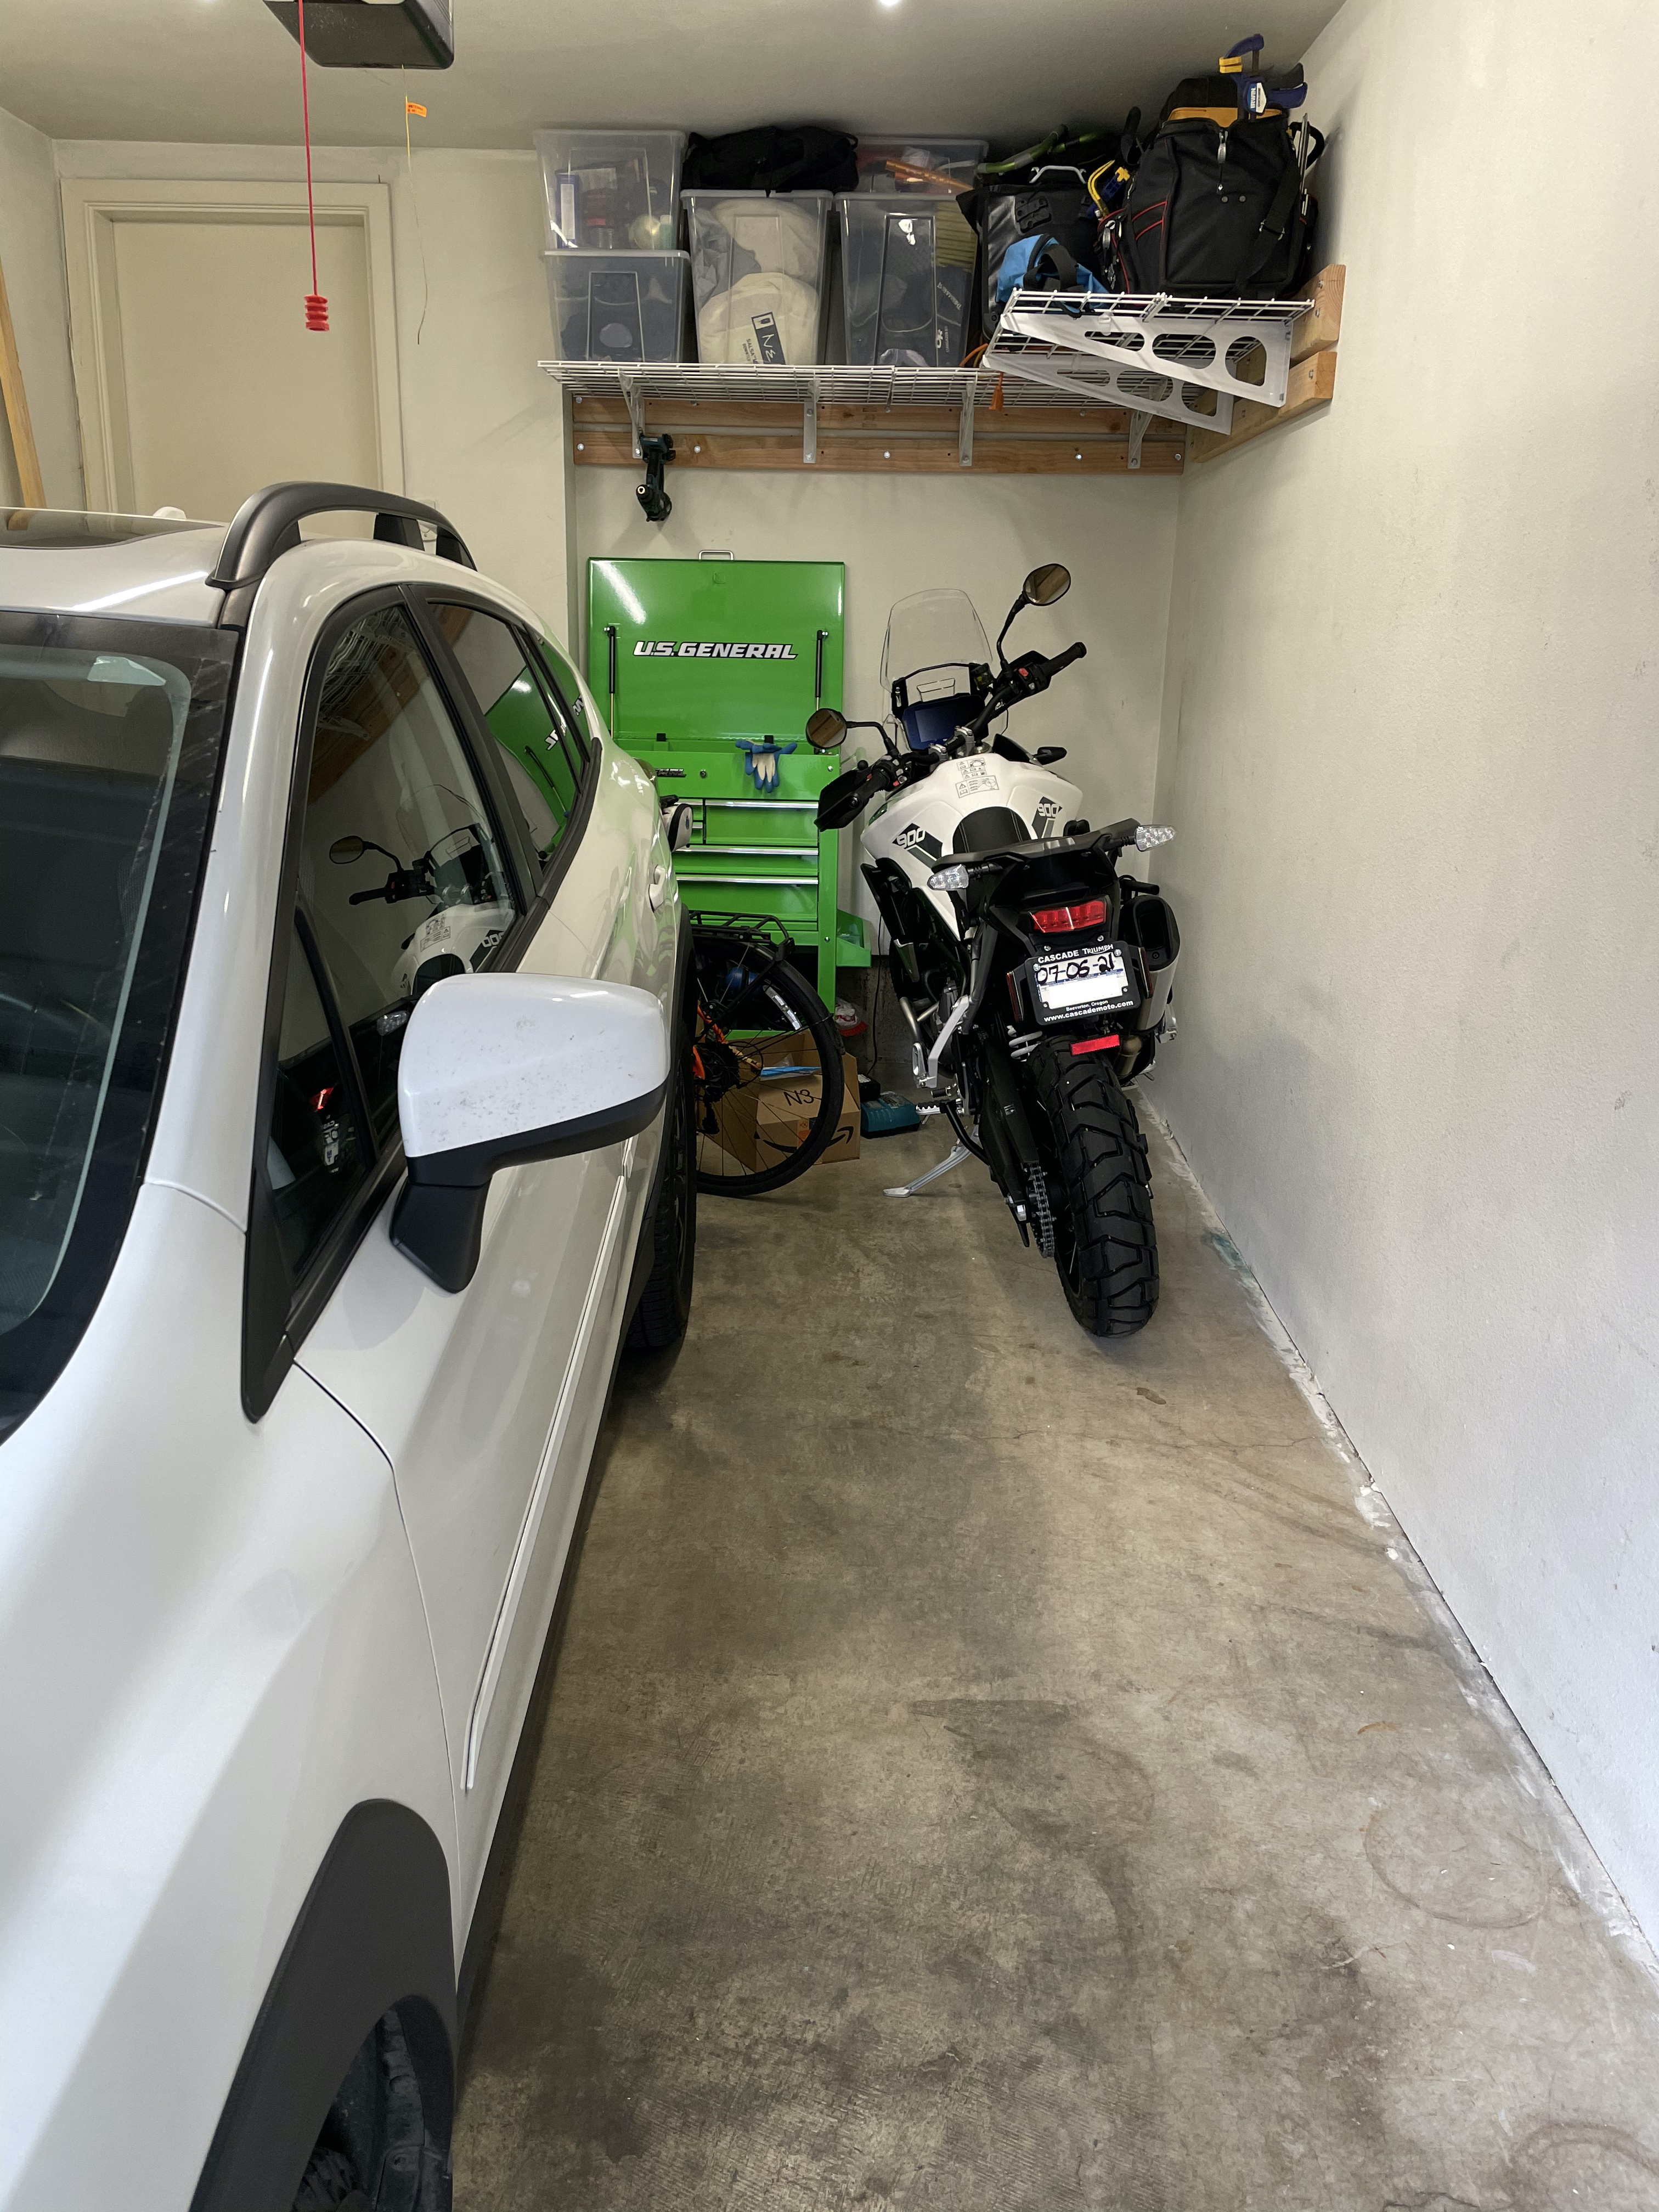 Motorcycle nestled into single car garage